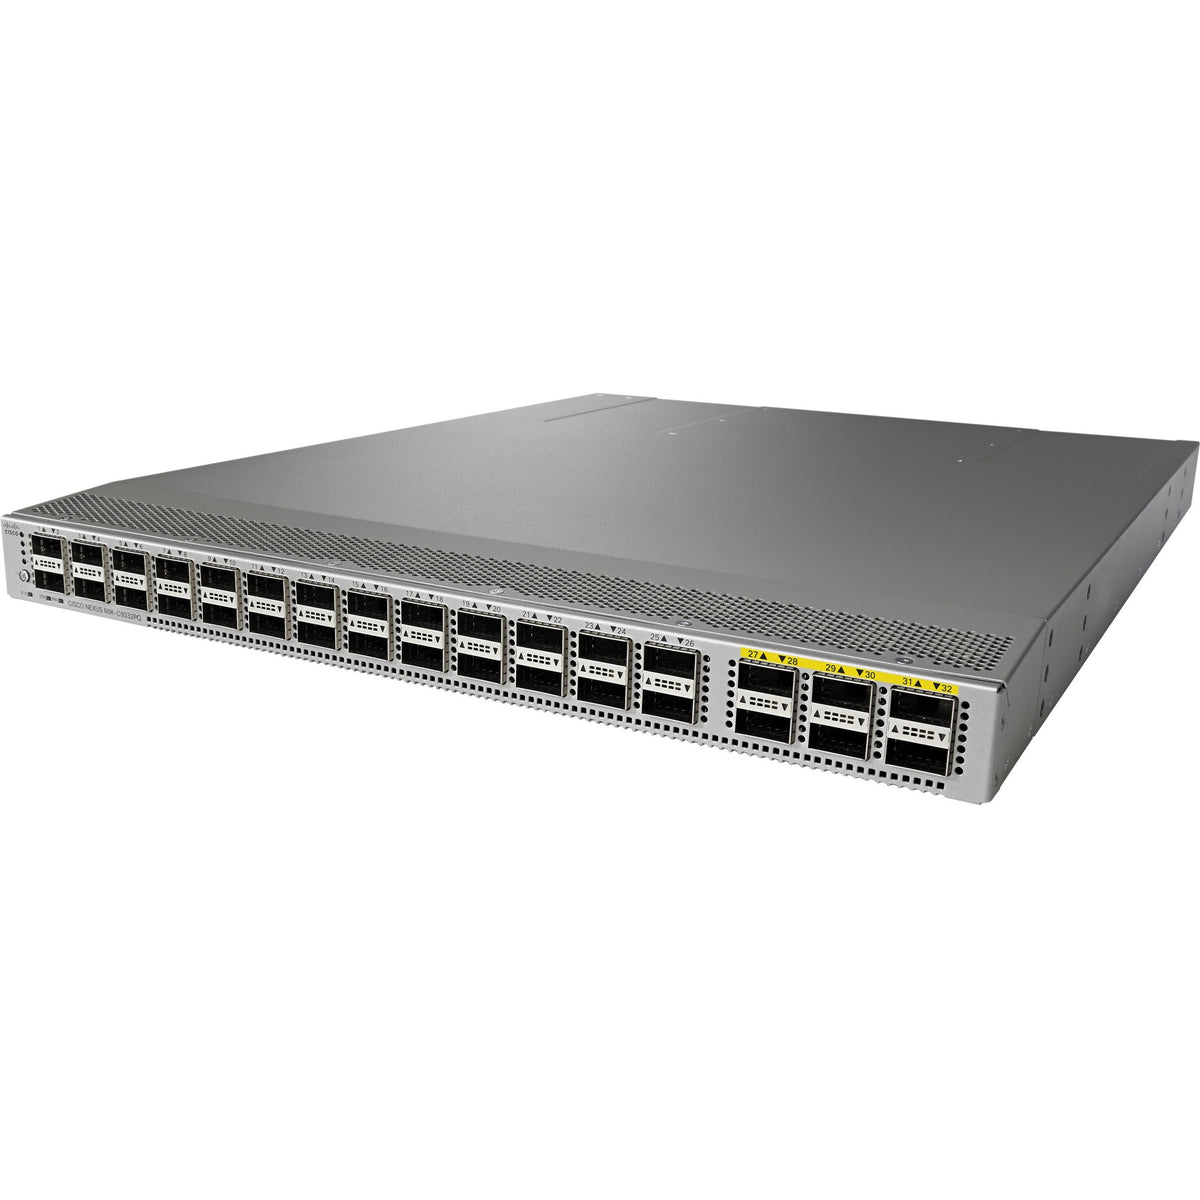 Cisco ONE Nexus 9332 ACI Leaf switch with 32p 40G QSFP - C1-N9K-C9332PQ